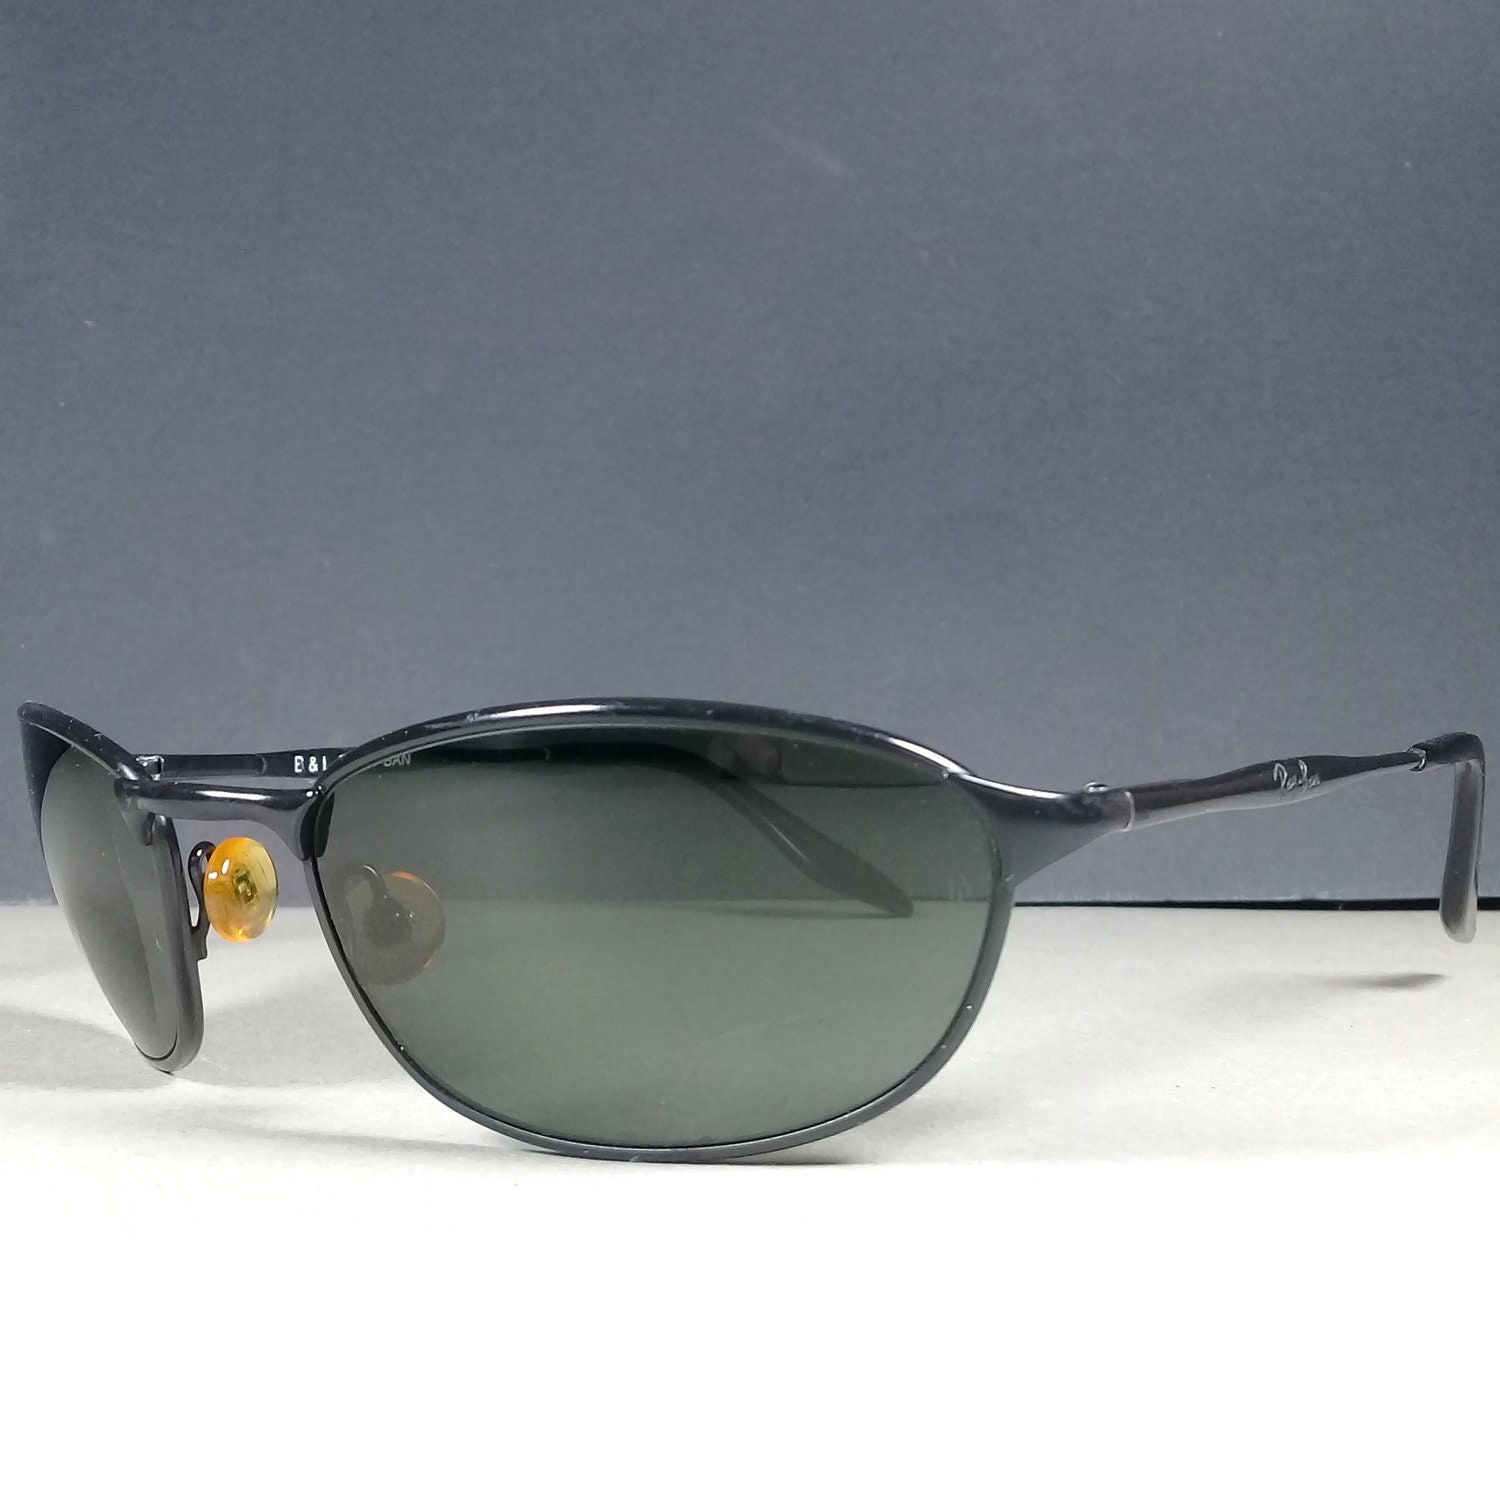 Ray Ban Bausch & Lomb W2963 Black Highstreet G15 Green Lenses B&L Sunglasses US Made